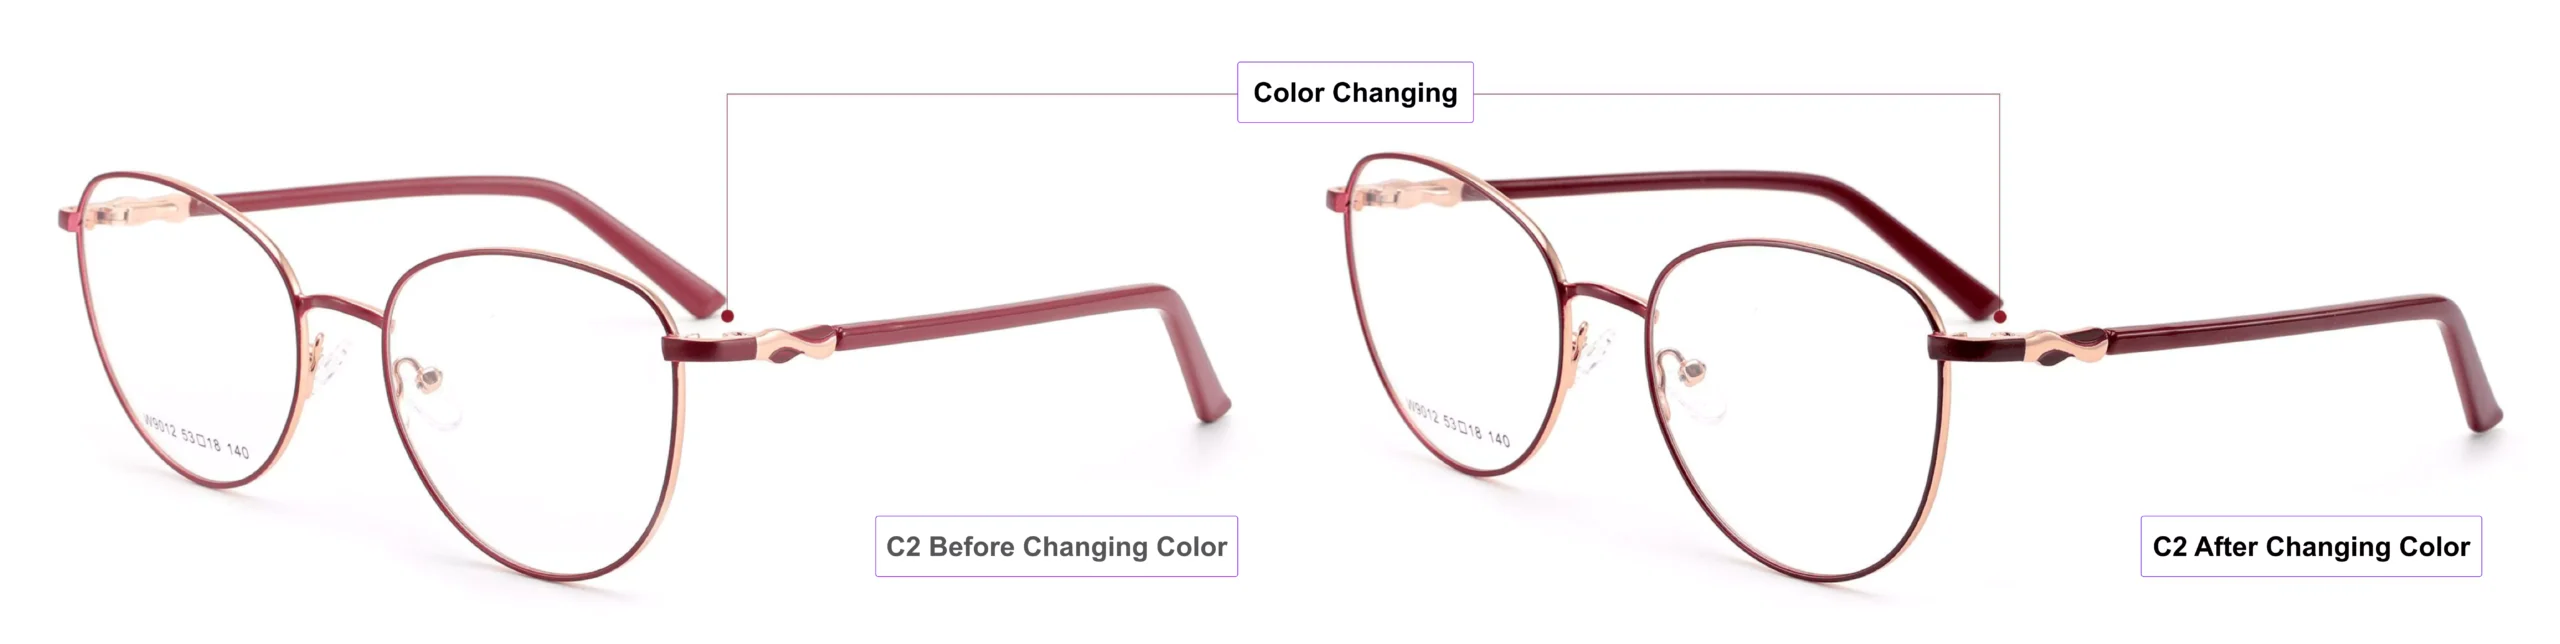 Color Changing Glasses Frames, process of glasses color changing, pink gold, crimson, dark red